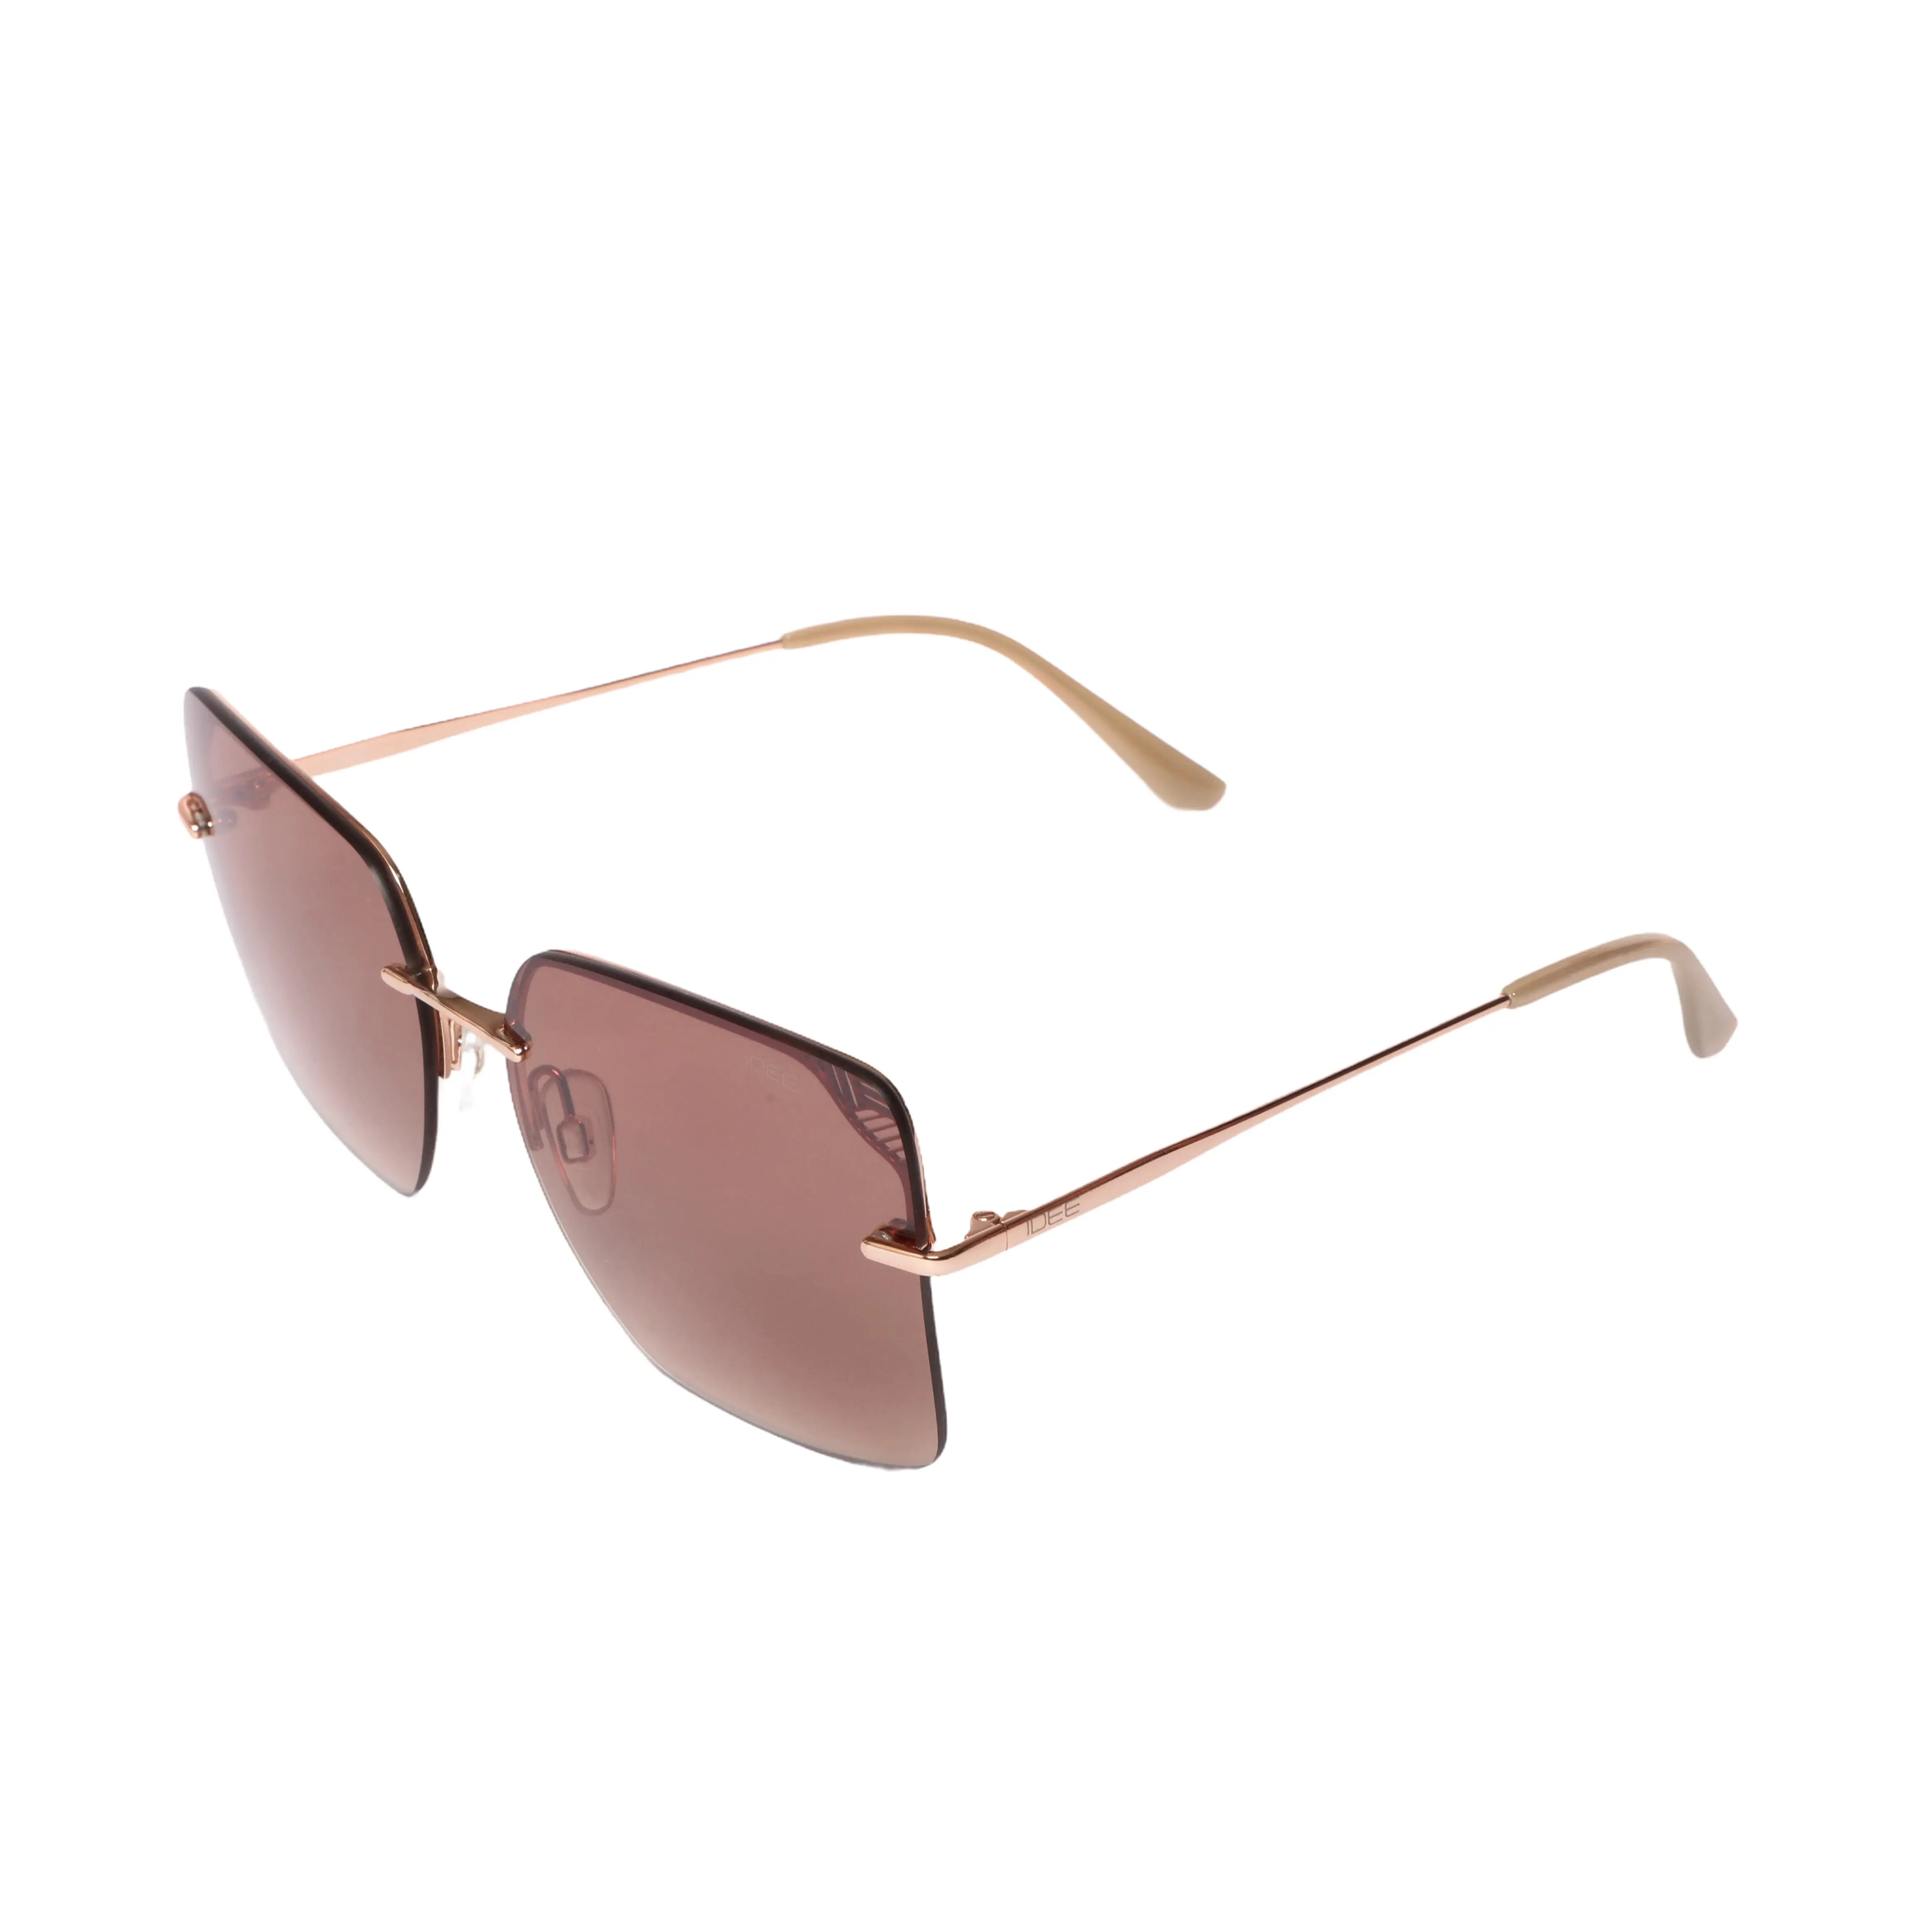 IDEE-S2805--C1 Sunglasses - Premium Sunglasses from IDEE - Just Rs. 4380! Shop now at Laxmi Opticians